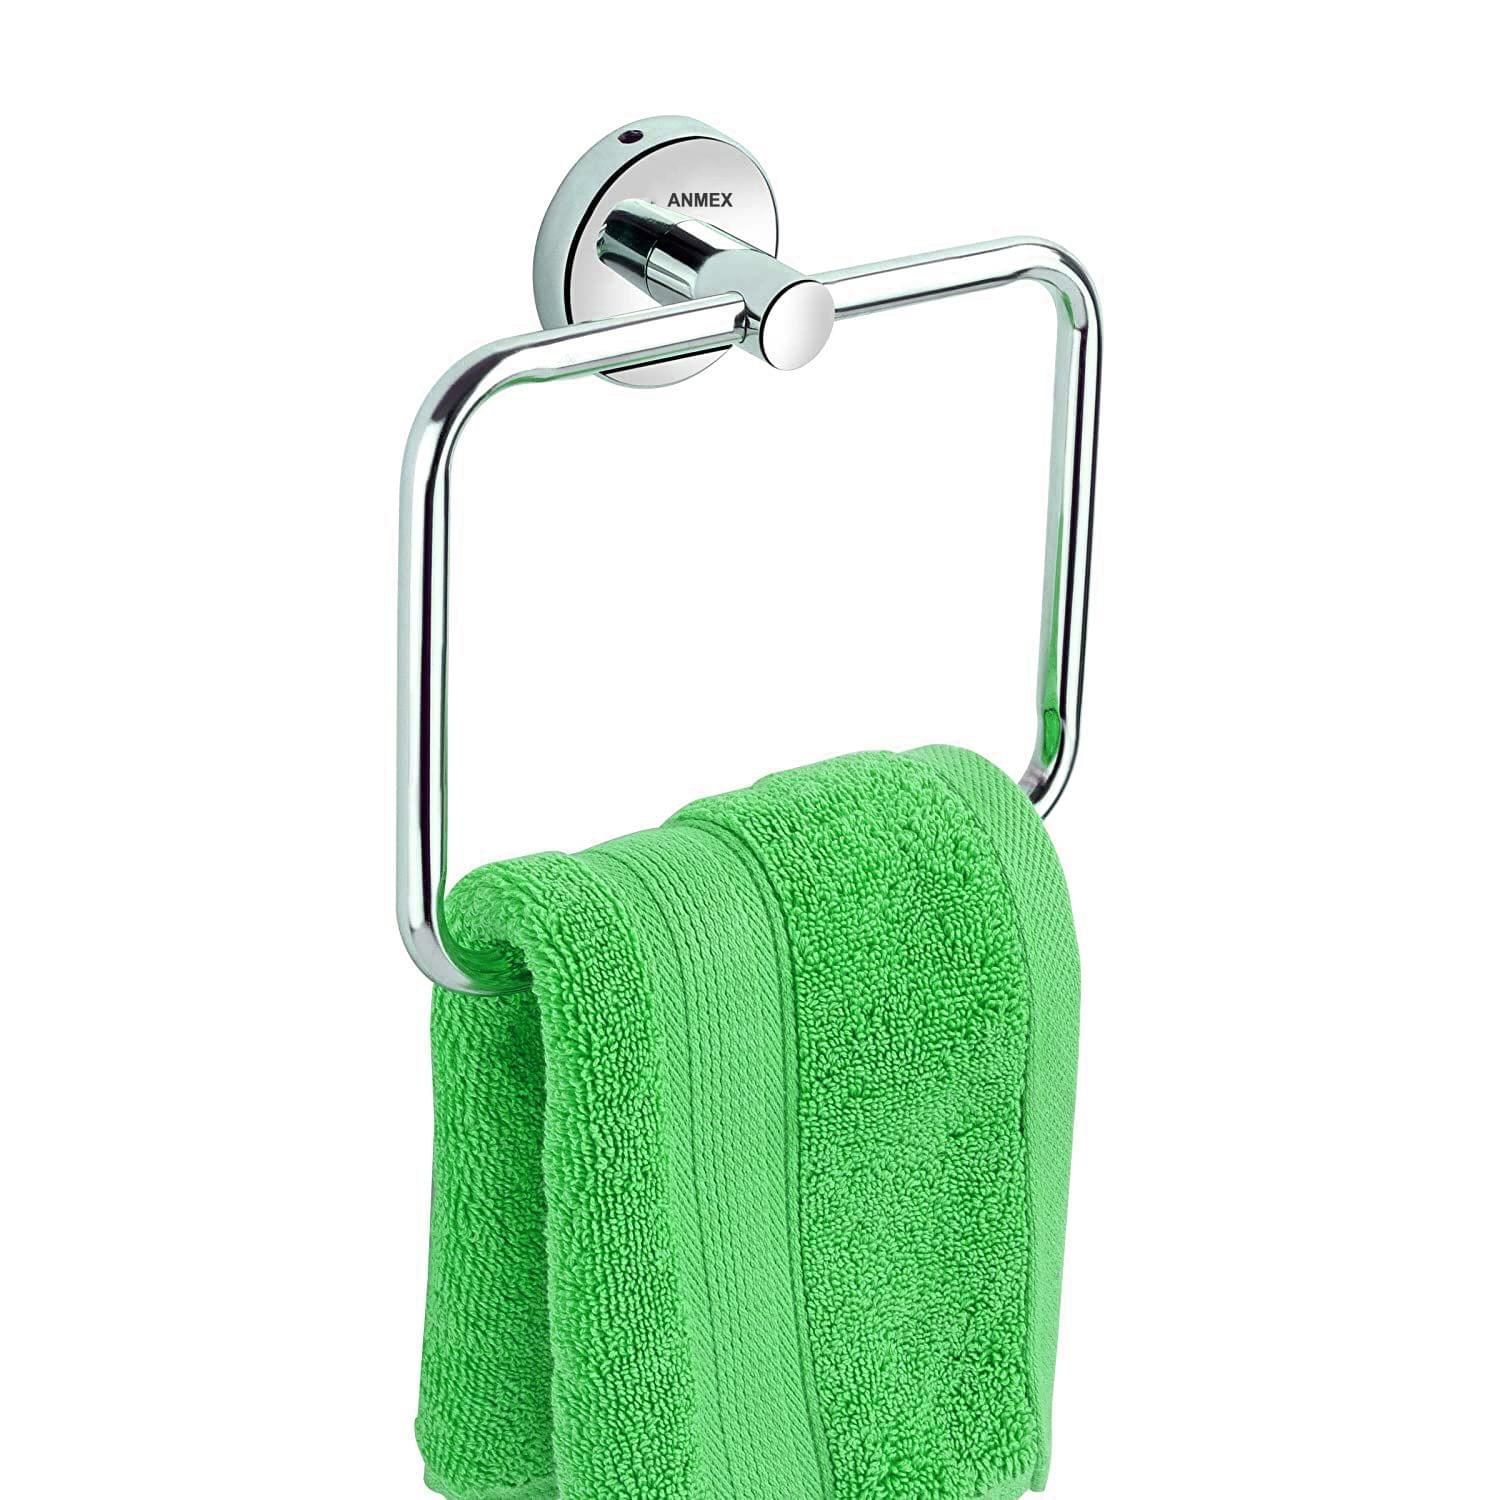 hand towel holder idea. Like putting wood around the mirror, new lights,  and the hand towel holder. | Hand towels bathroom, Bathroom makeover, Small  bathroom